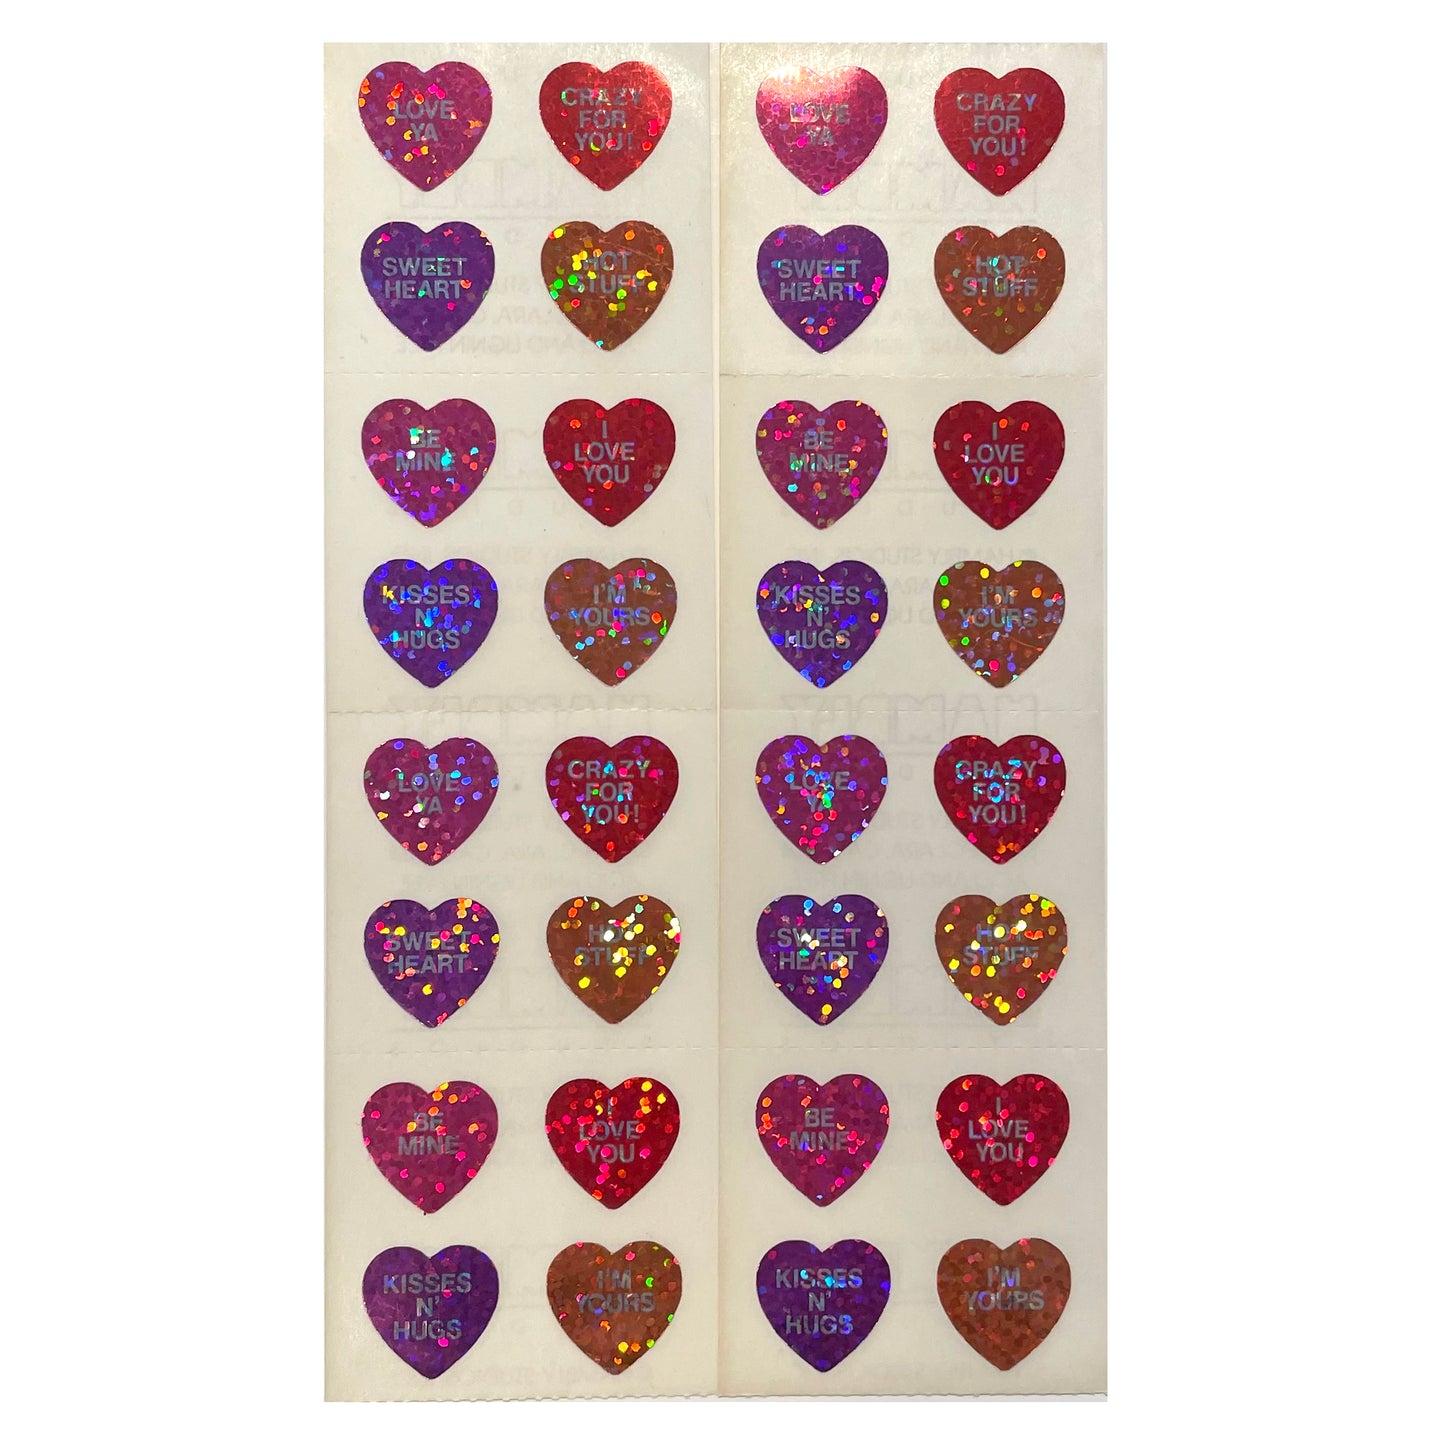 HAMBLY: Conversation Hearts glitter stickers